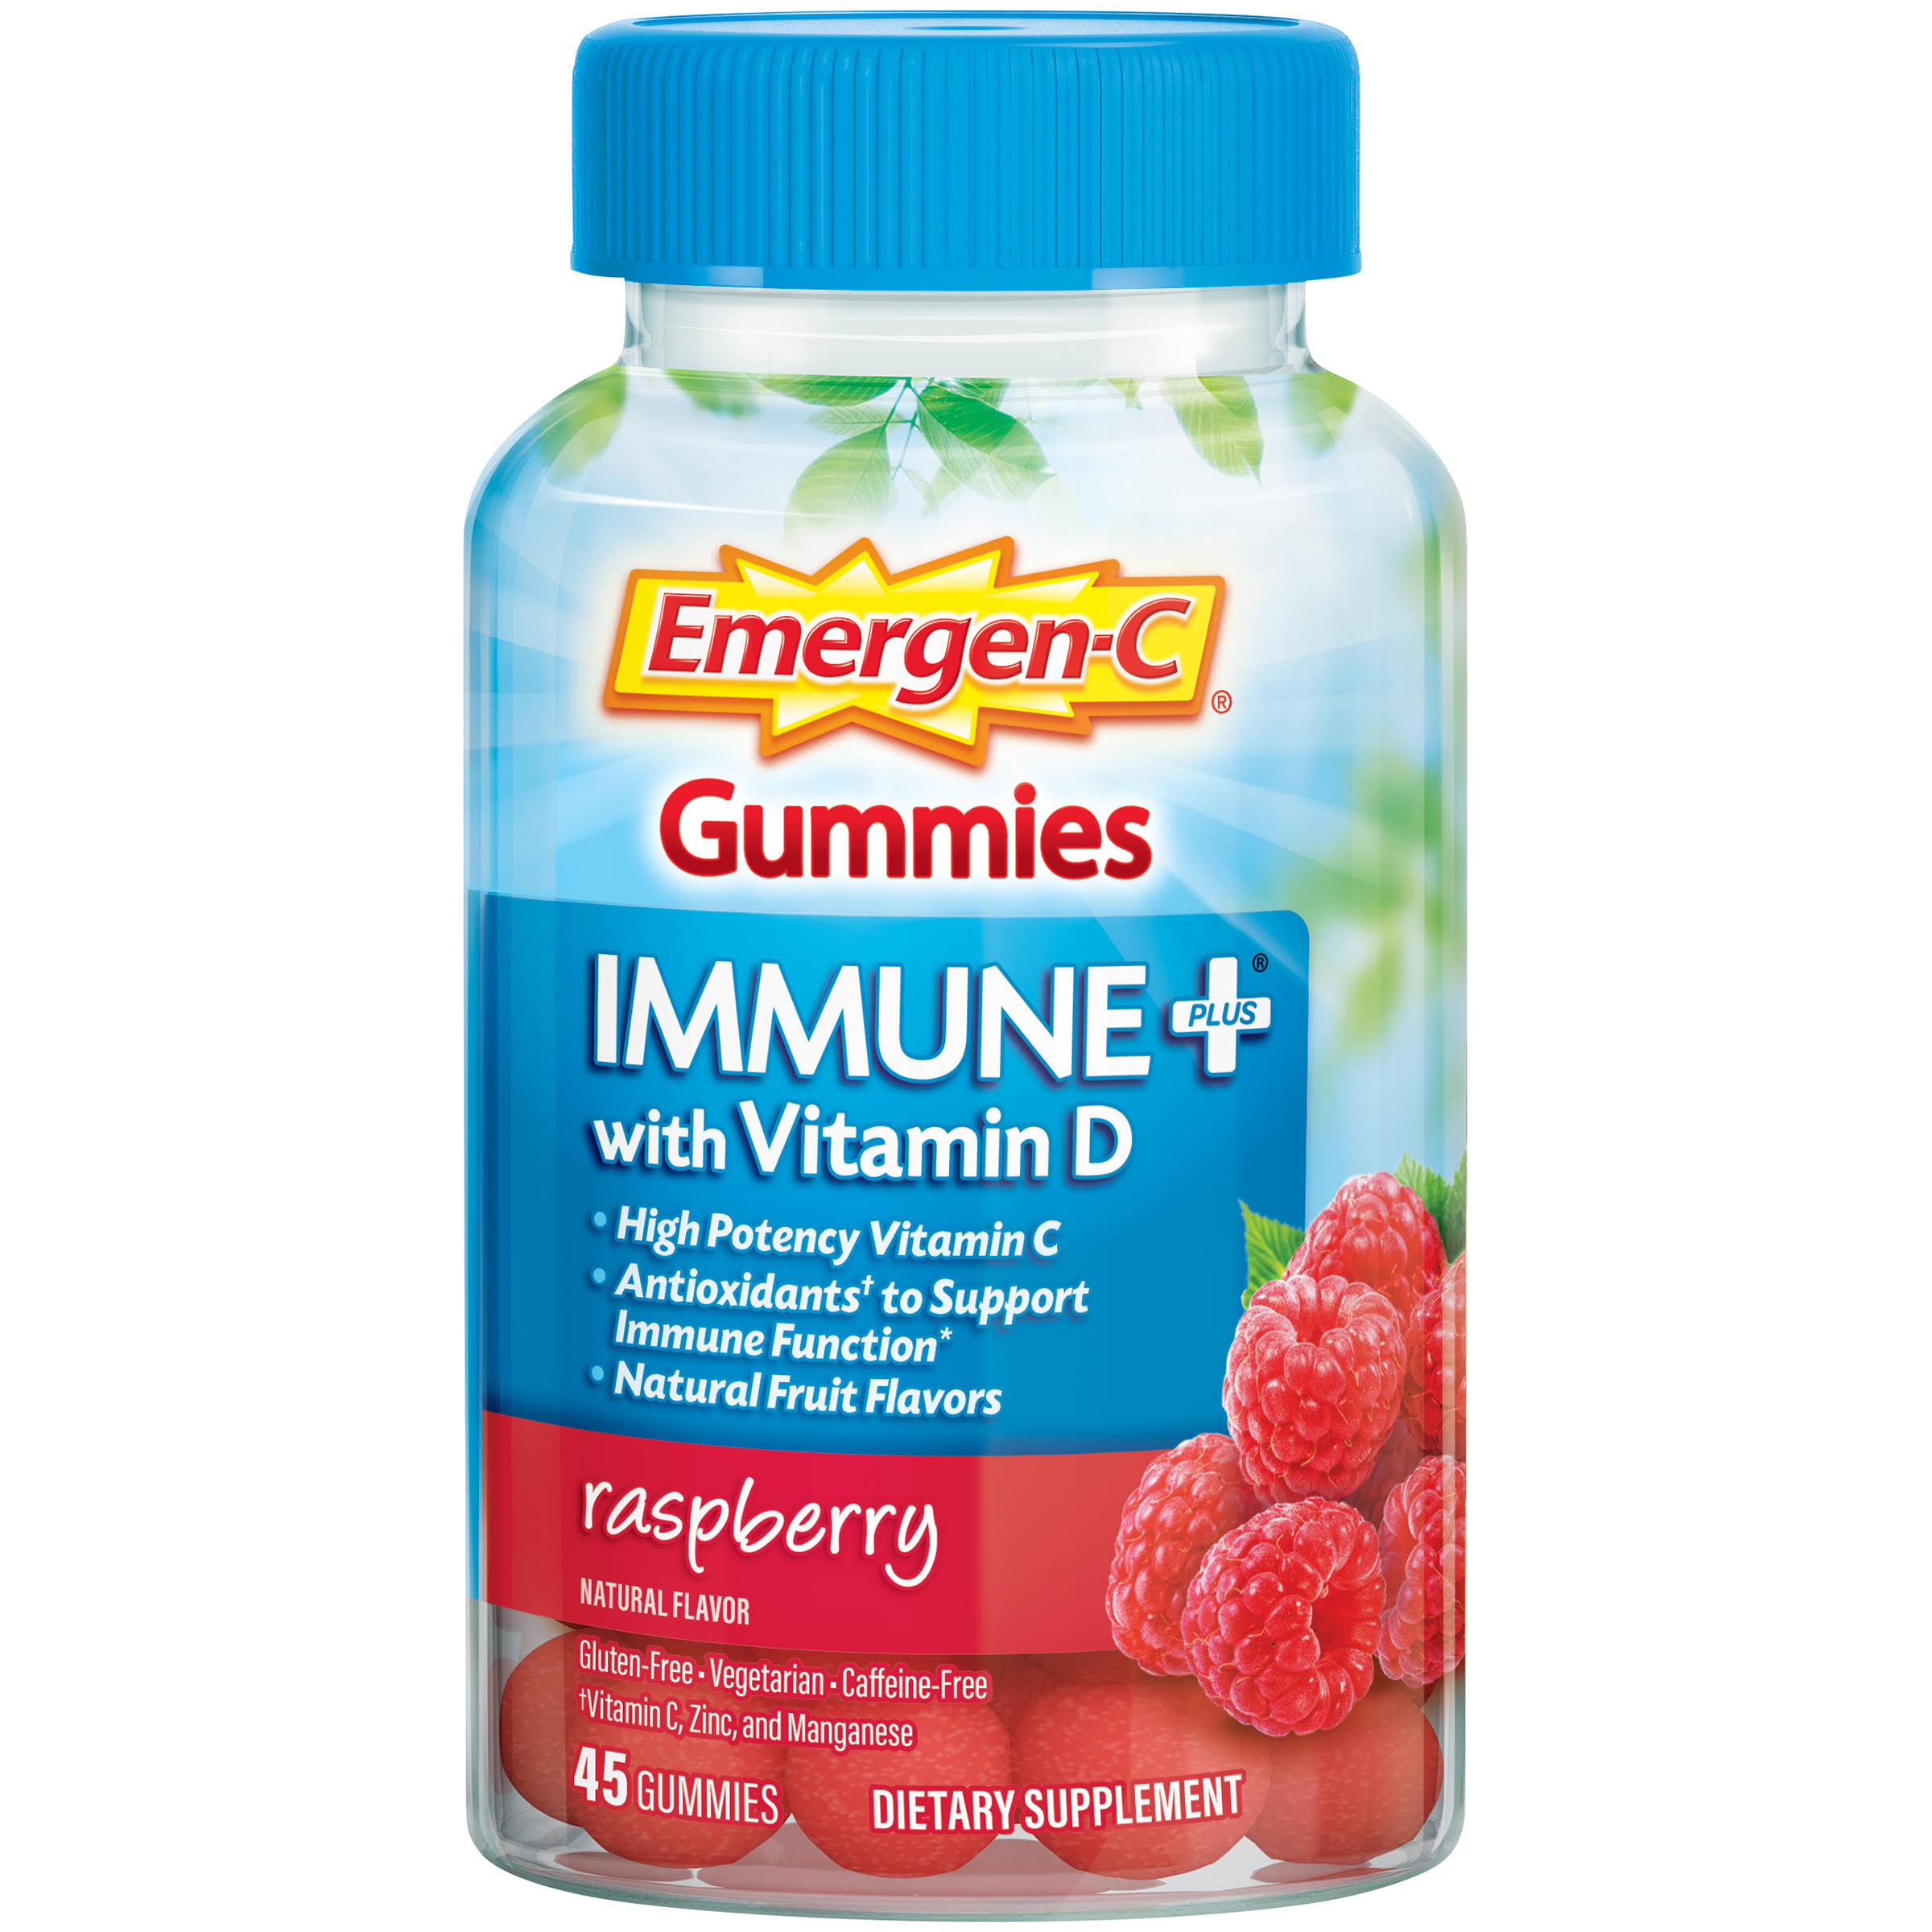 Emergen-C Immune Plus with Vitamin D Gummies - Raspberry, 45pcs